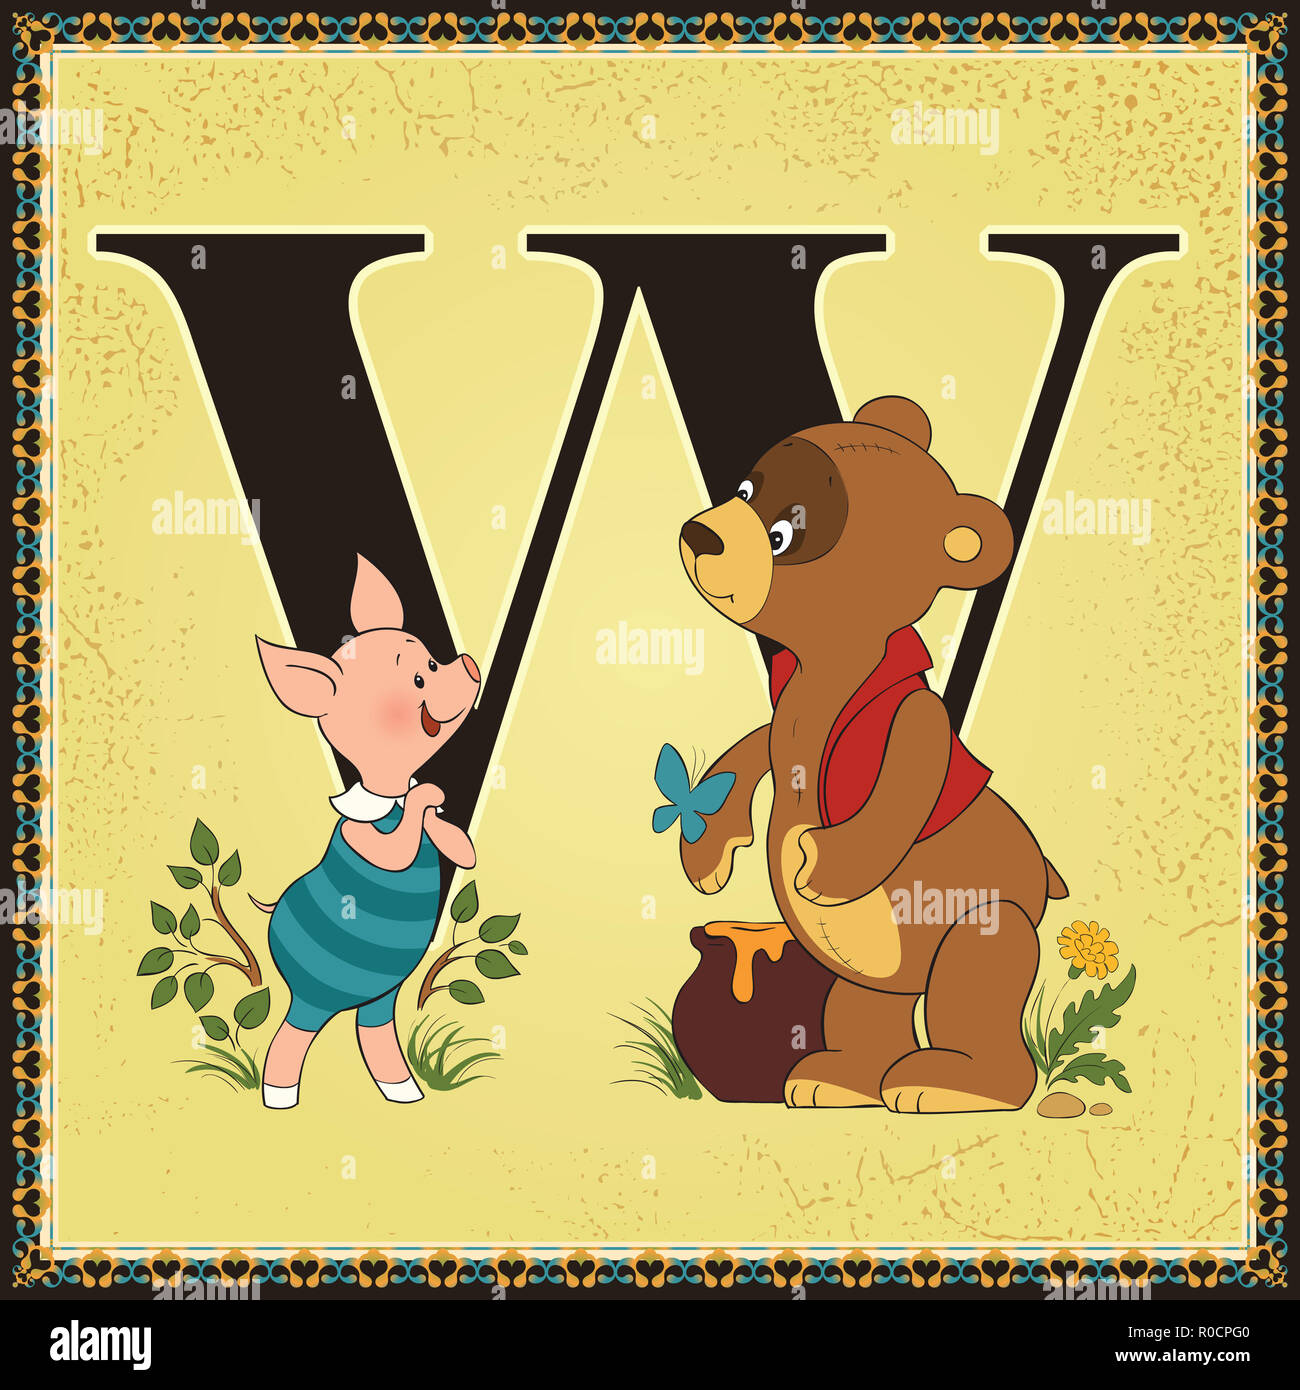 Hello, Winnie the Pooh! by Disney Books Disney Storybook Art Team - Disney,  Disney Baby, Winnie the Pooh, Winnie the Pooh & Friends Books